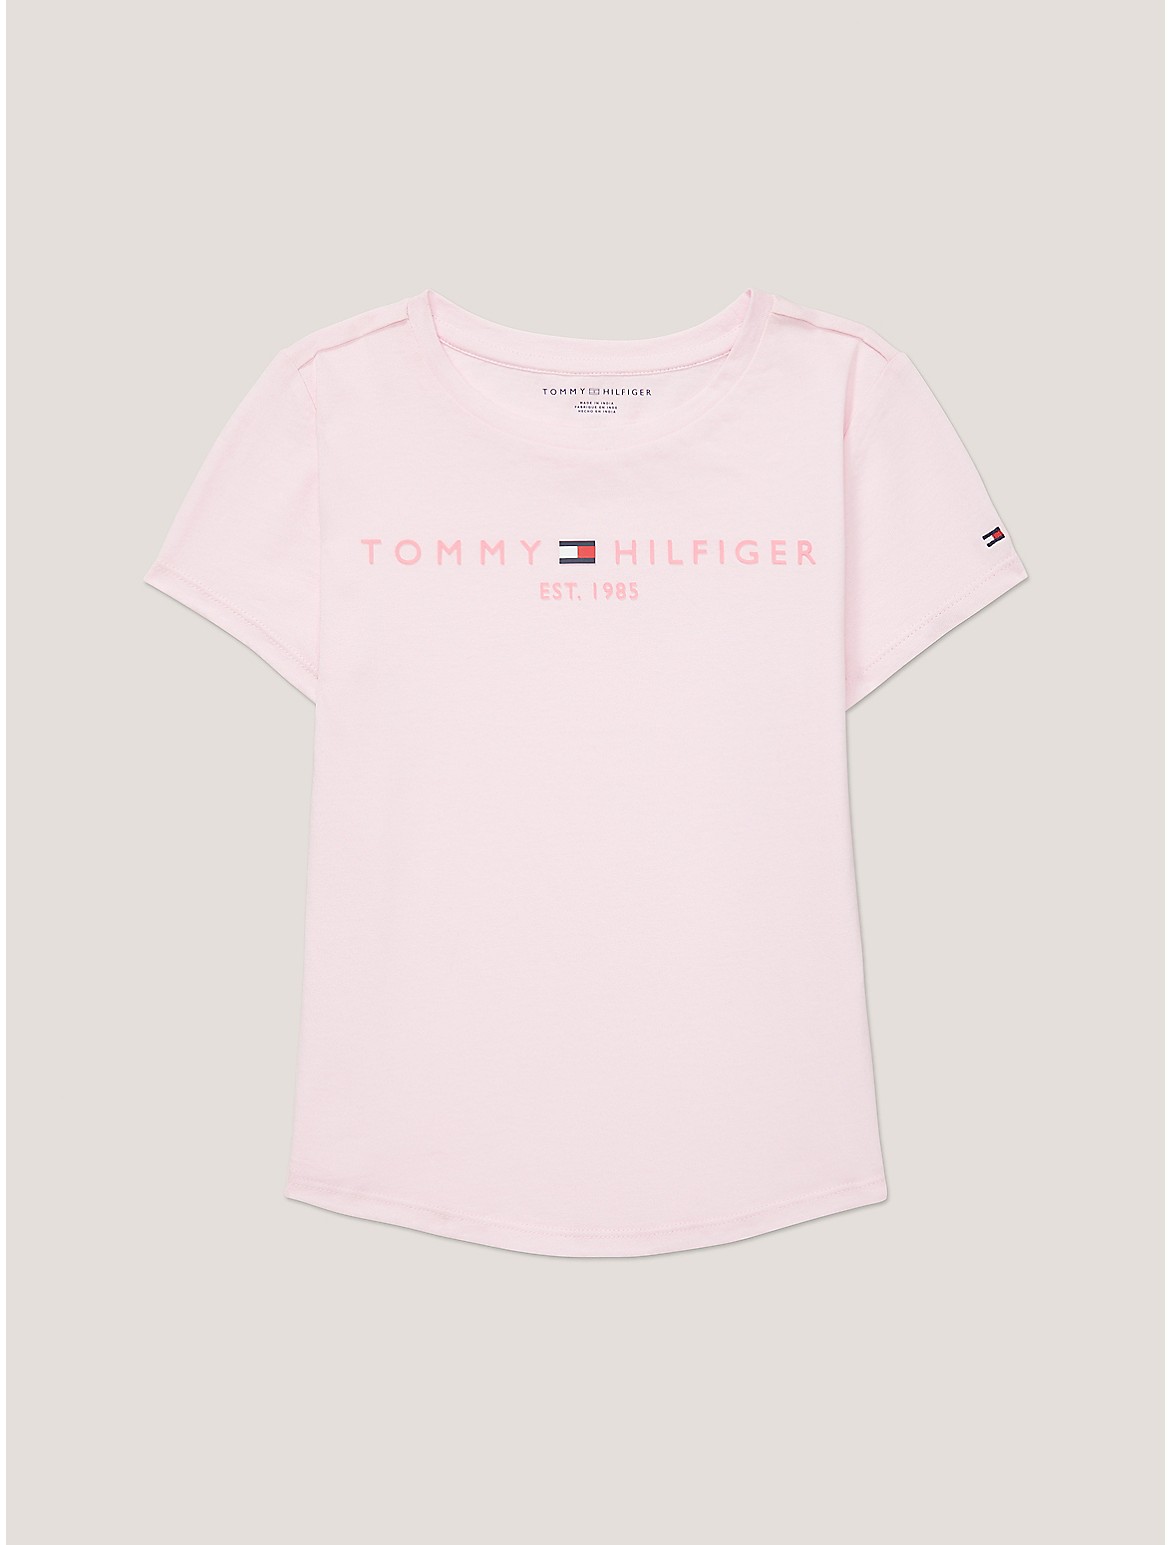 Tommy Hilfiger Girls' Kids' Hilfiger Logo T-Shirt